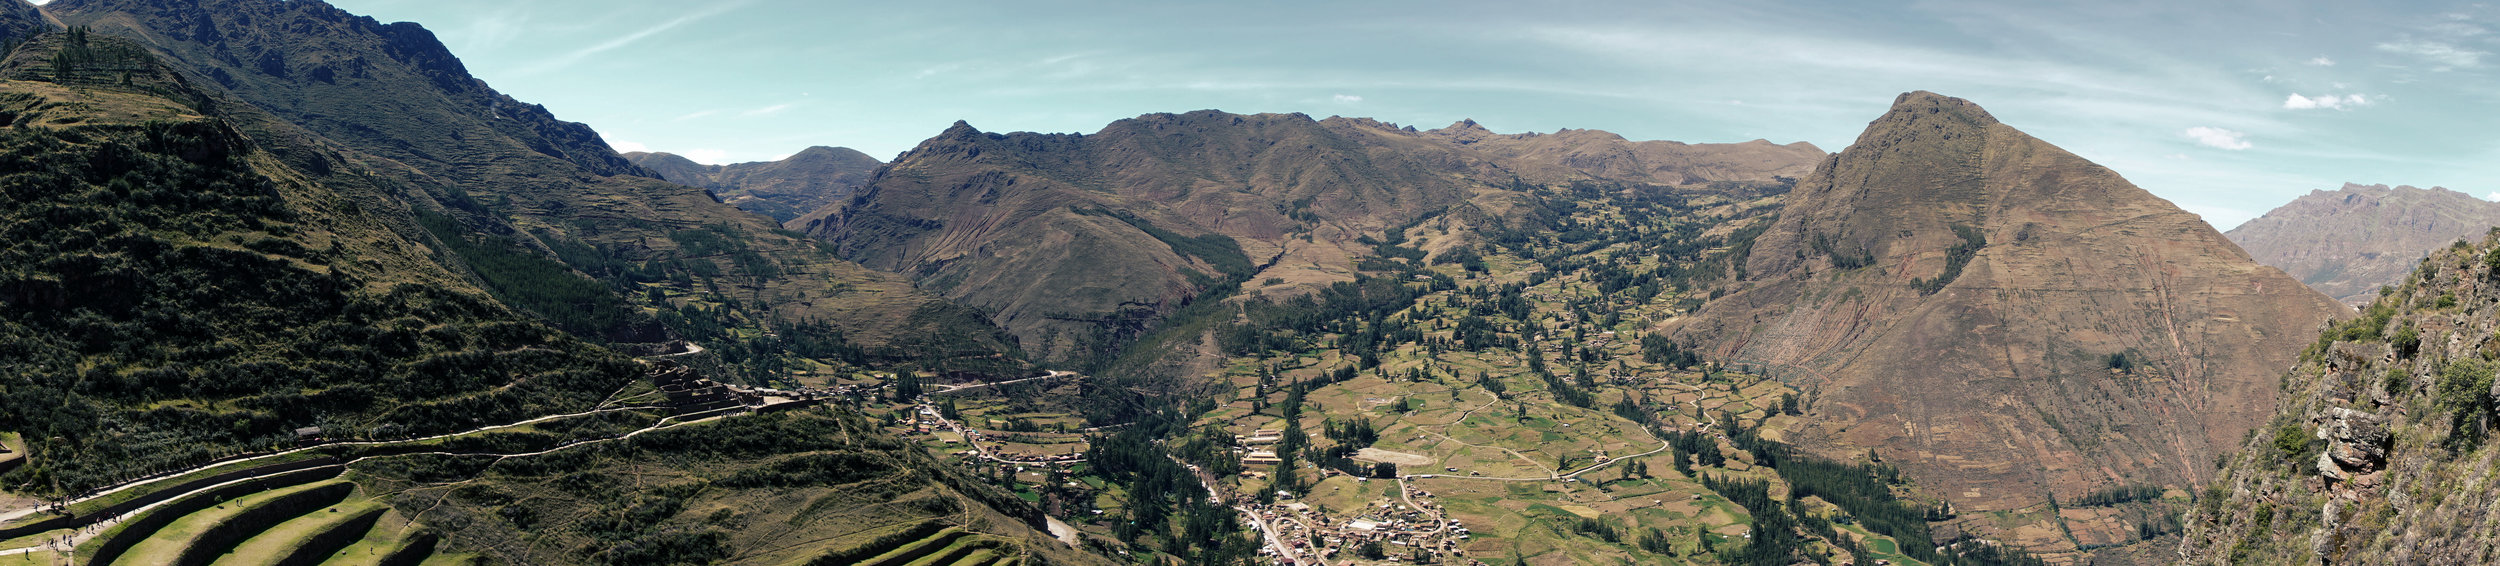 Peru170355.jpg